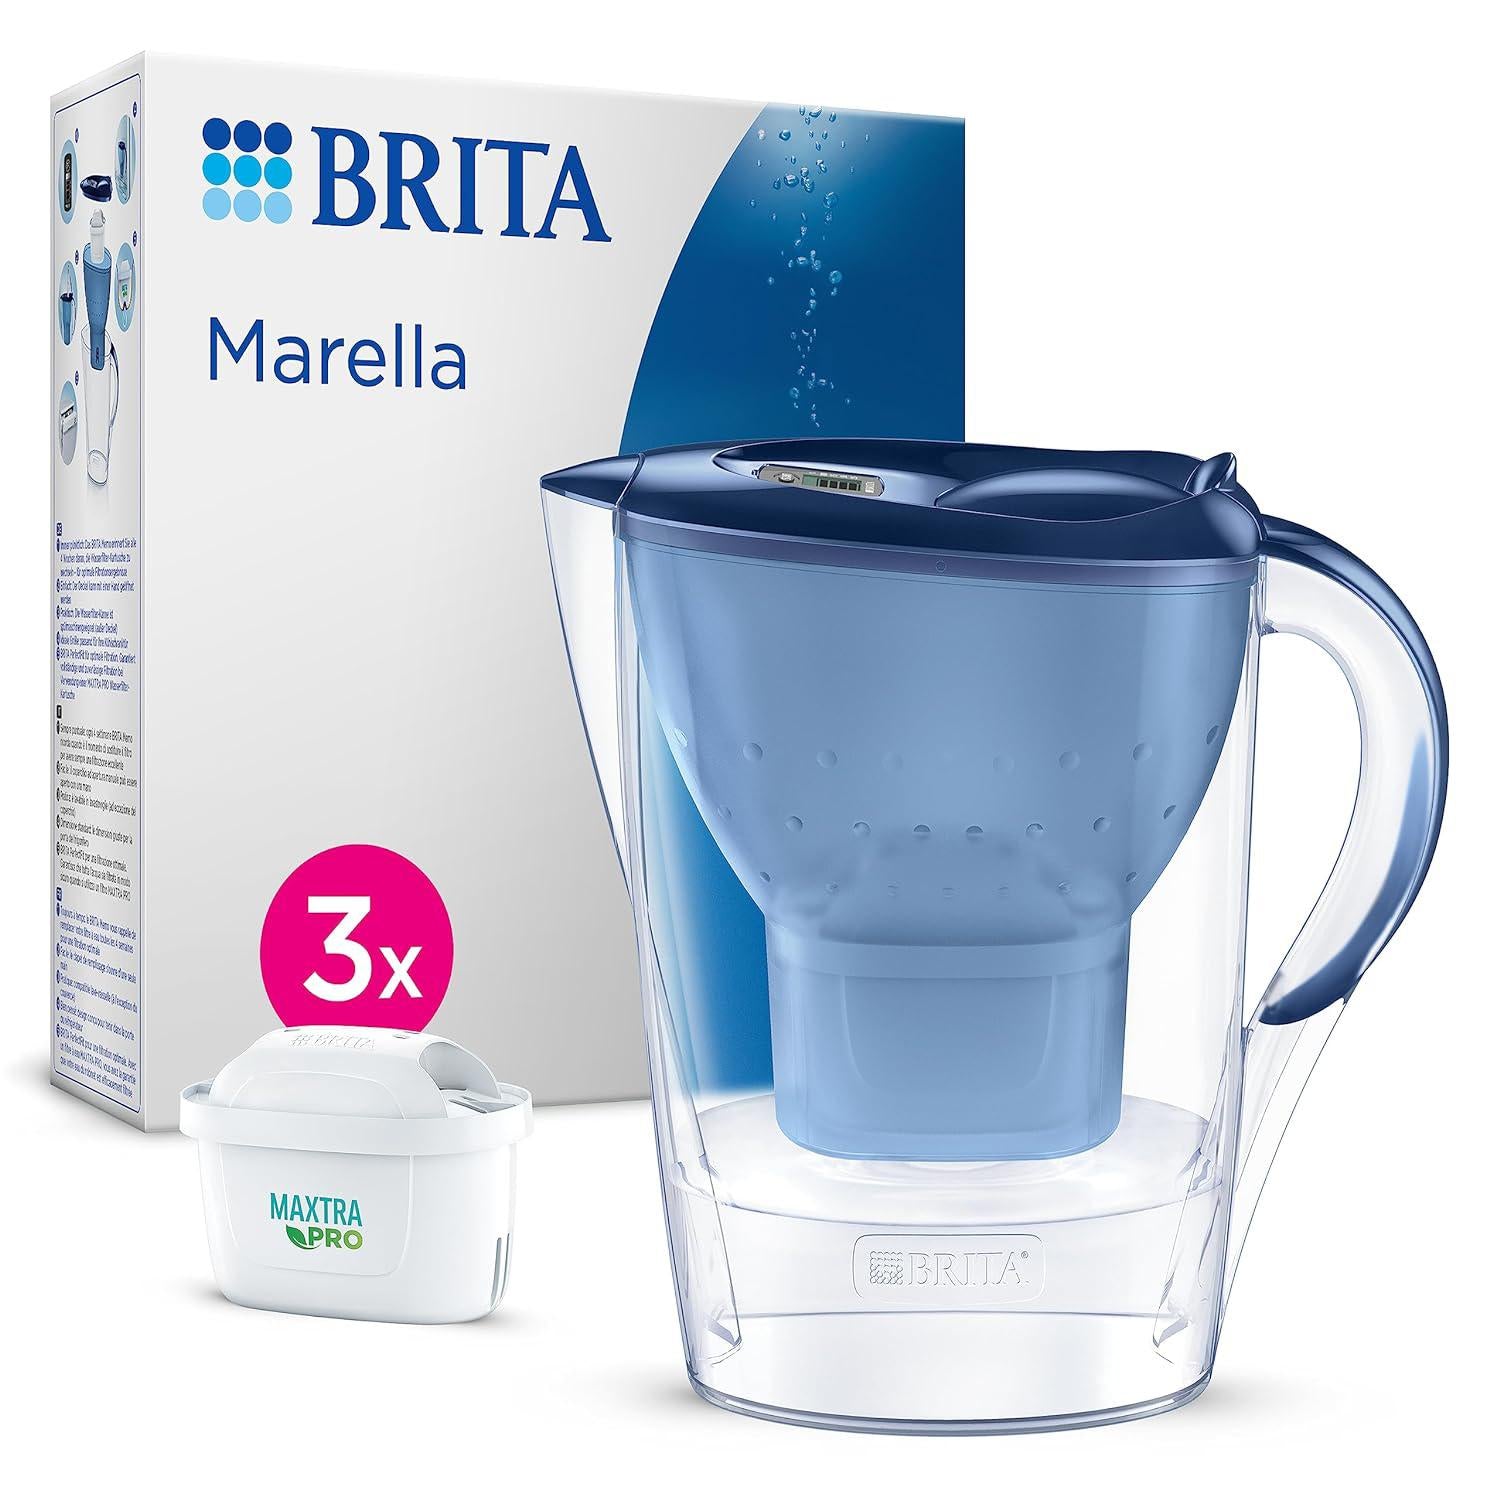 Brita Marella MAXTRA Pro Water Filter Jug - MicroFlow Technology - 2.4L, Blue with 3 Cartridge Refills